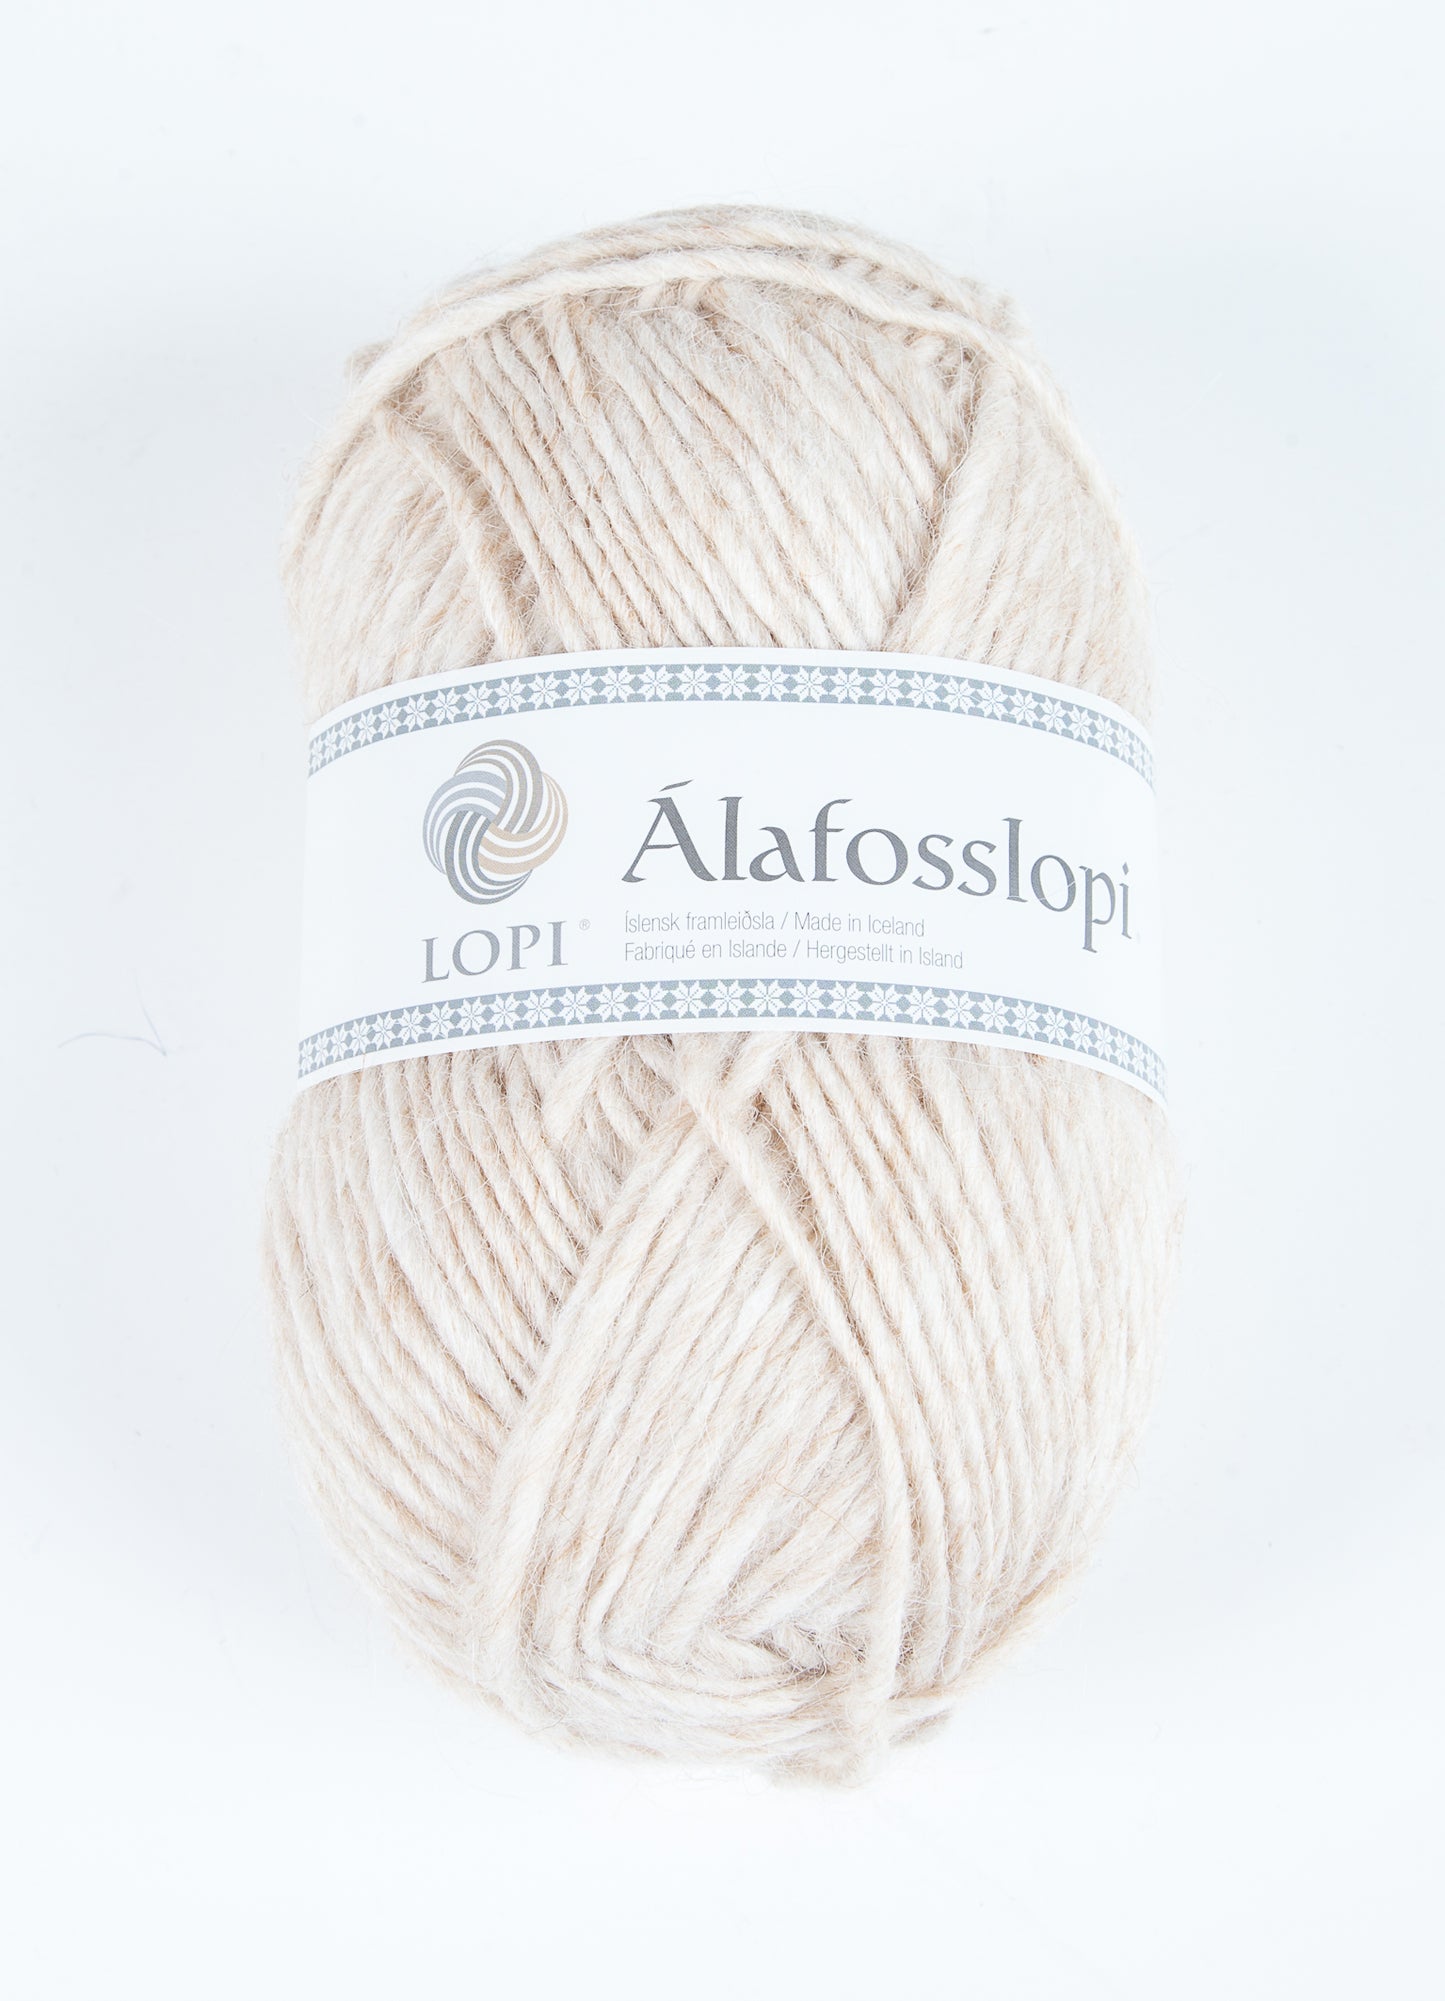 Istex Alafosslopi - alternate dye lots